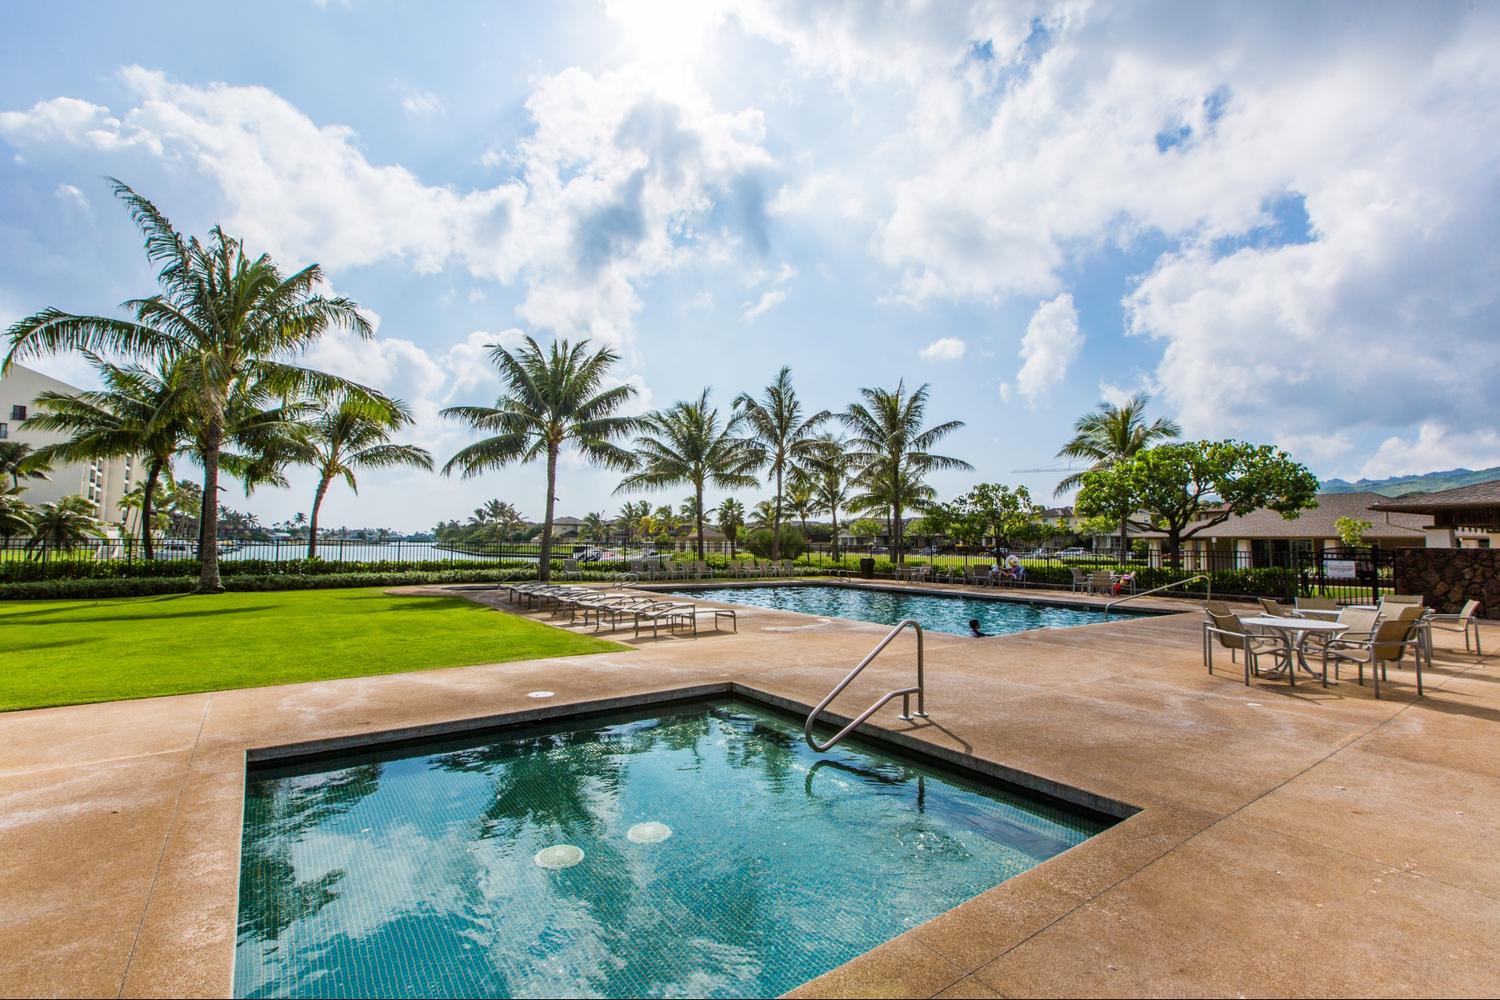 Honolulu Vacation Rentals, Ohana Kai - The pool in the common area at the Peninsula.